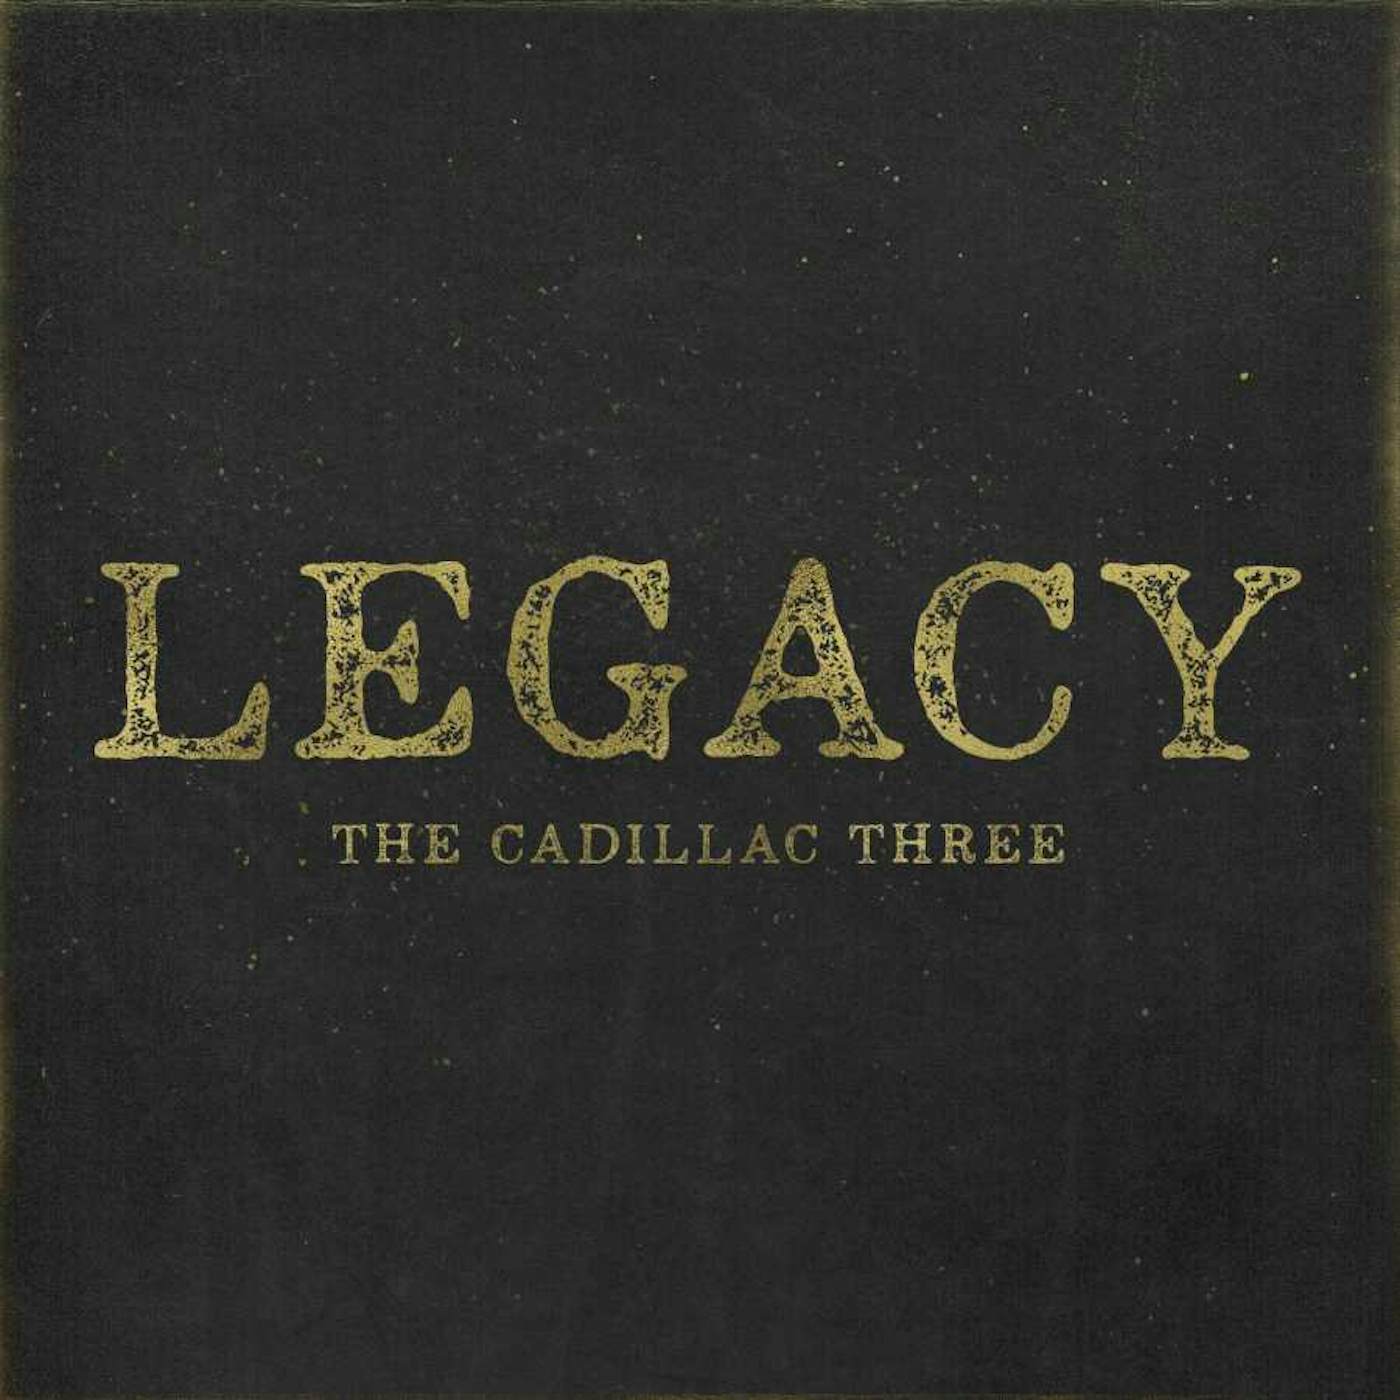 The Cadillac Three LEGACY CD